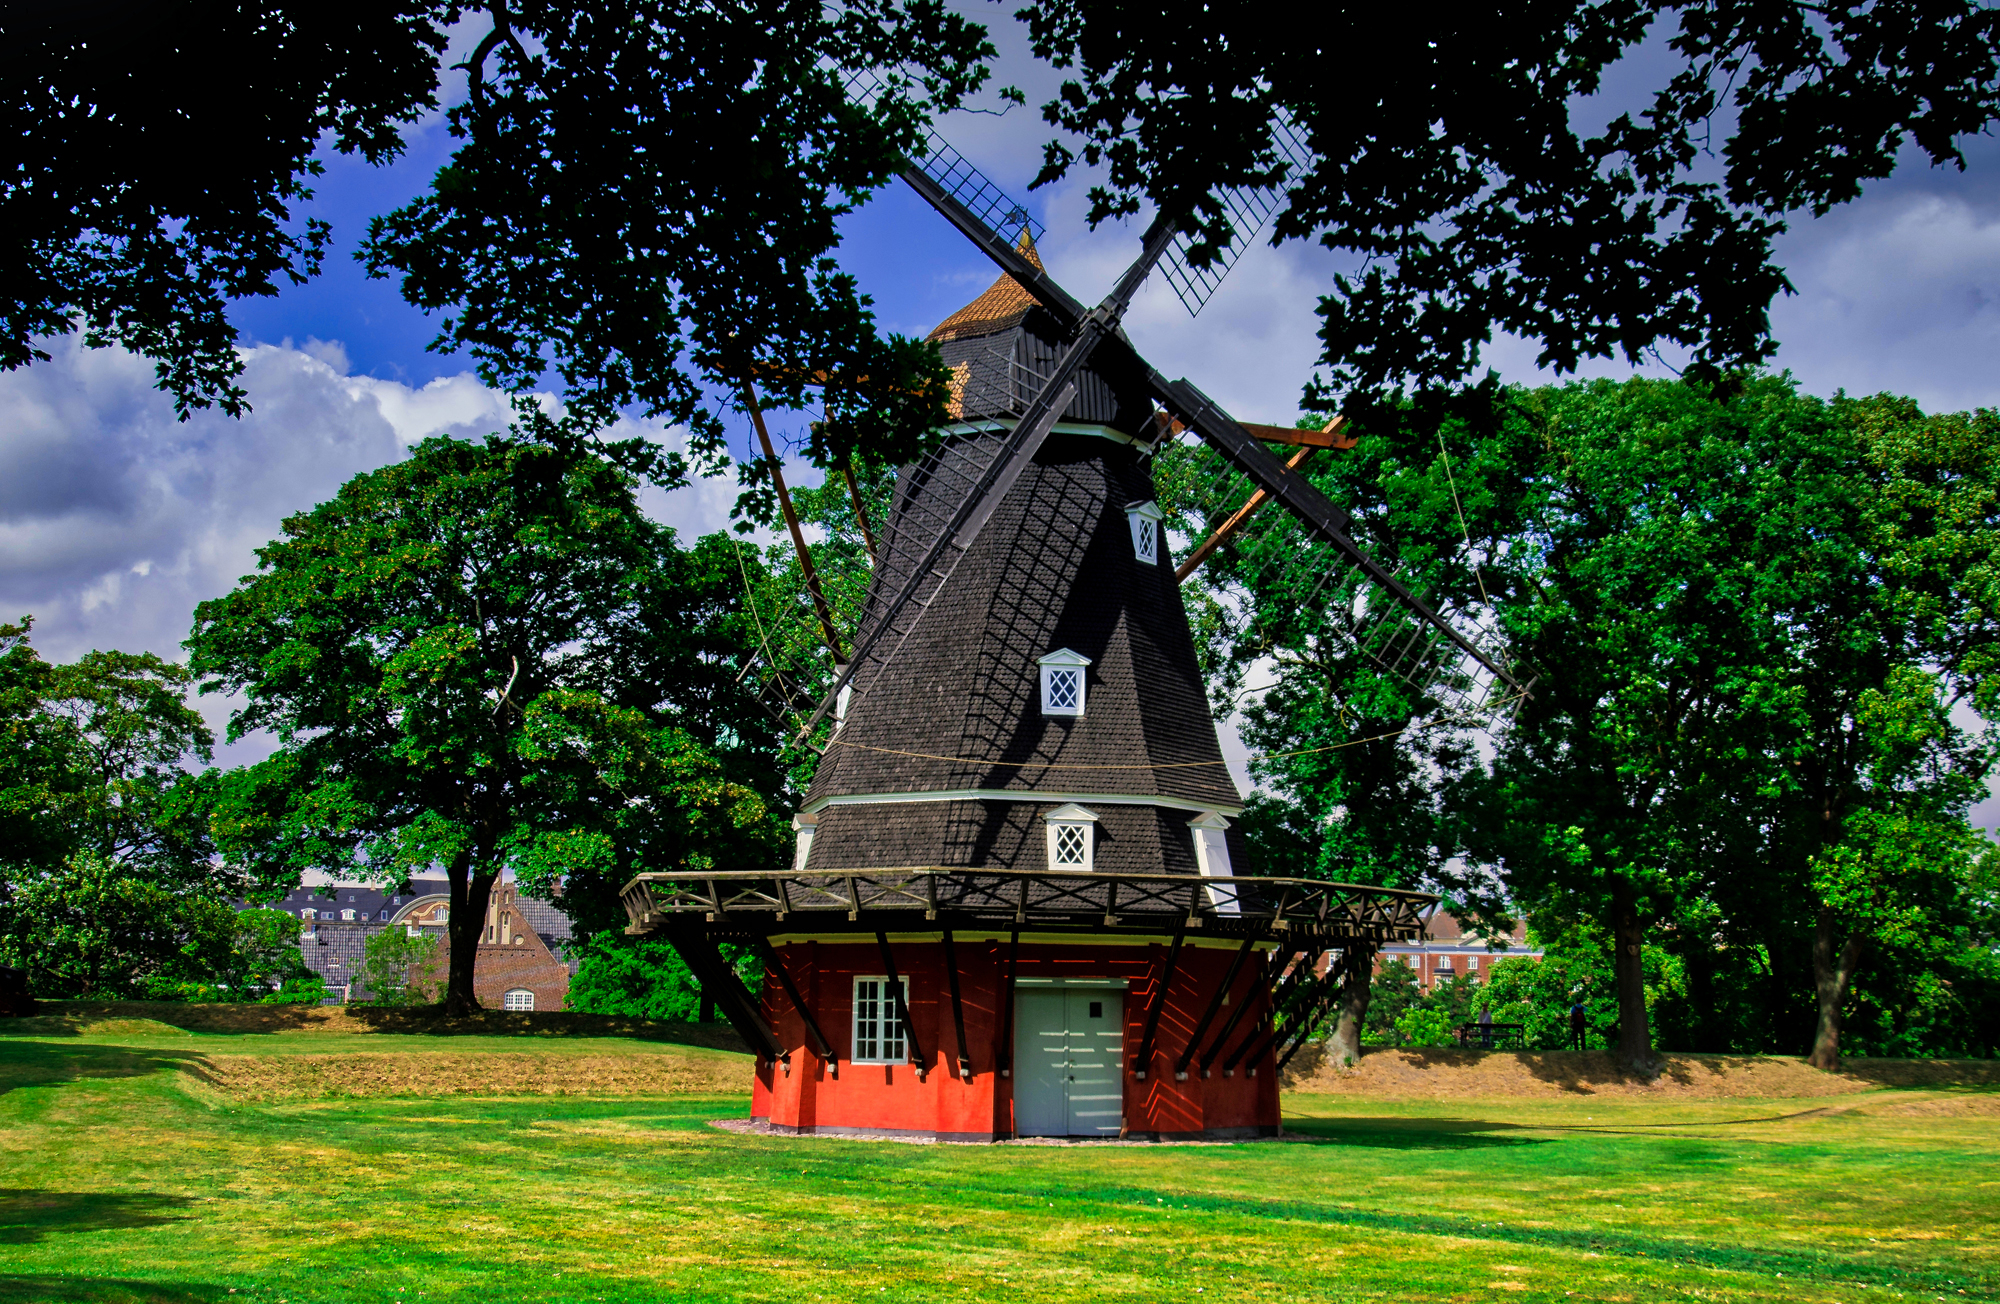 The Mill of Kastellet...